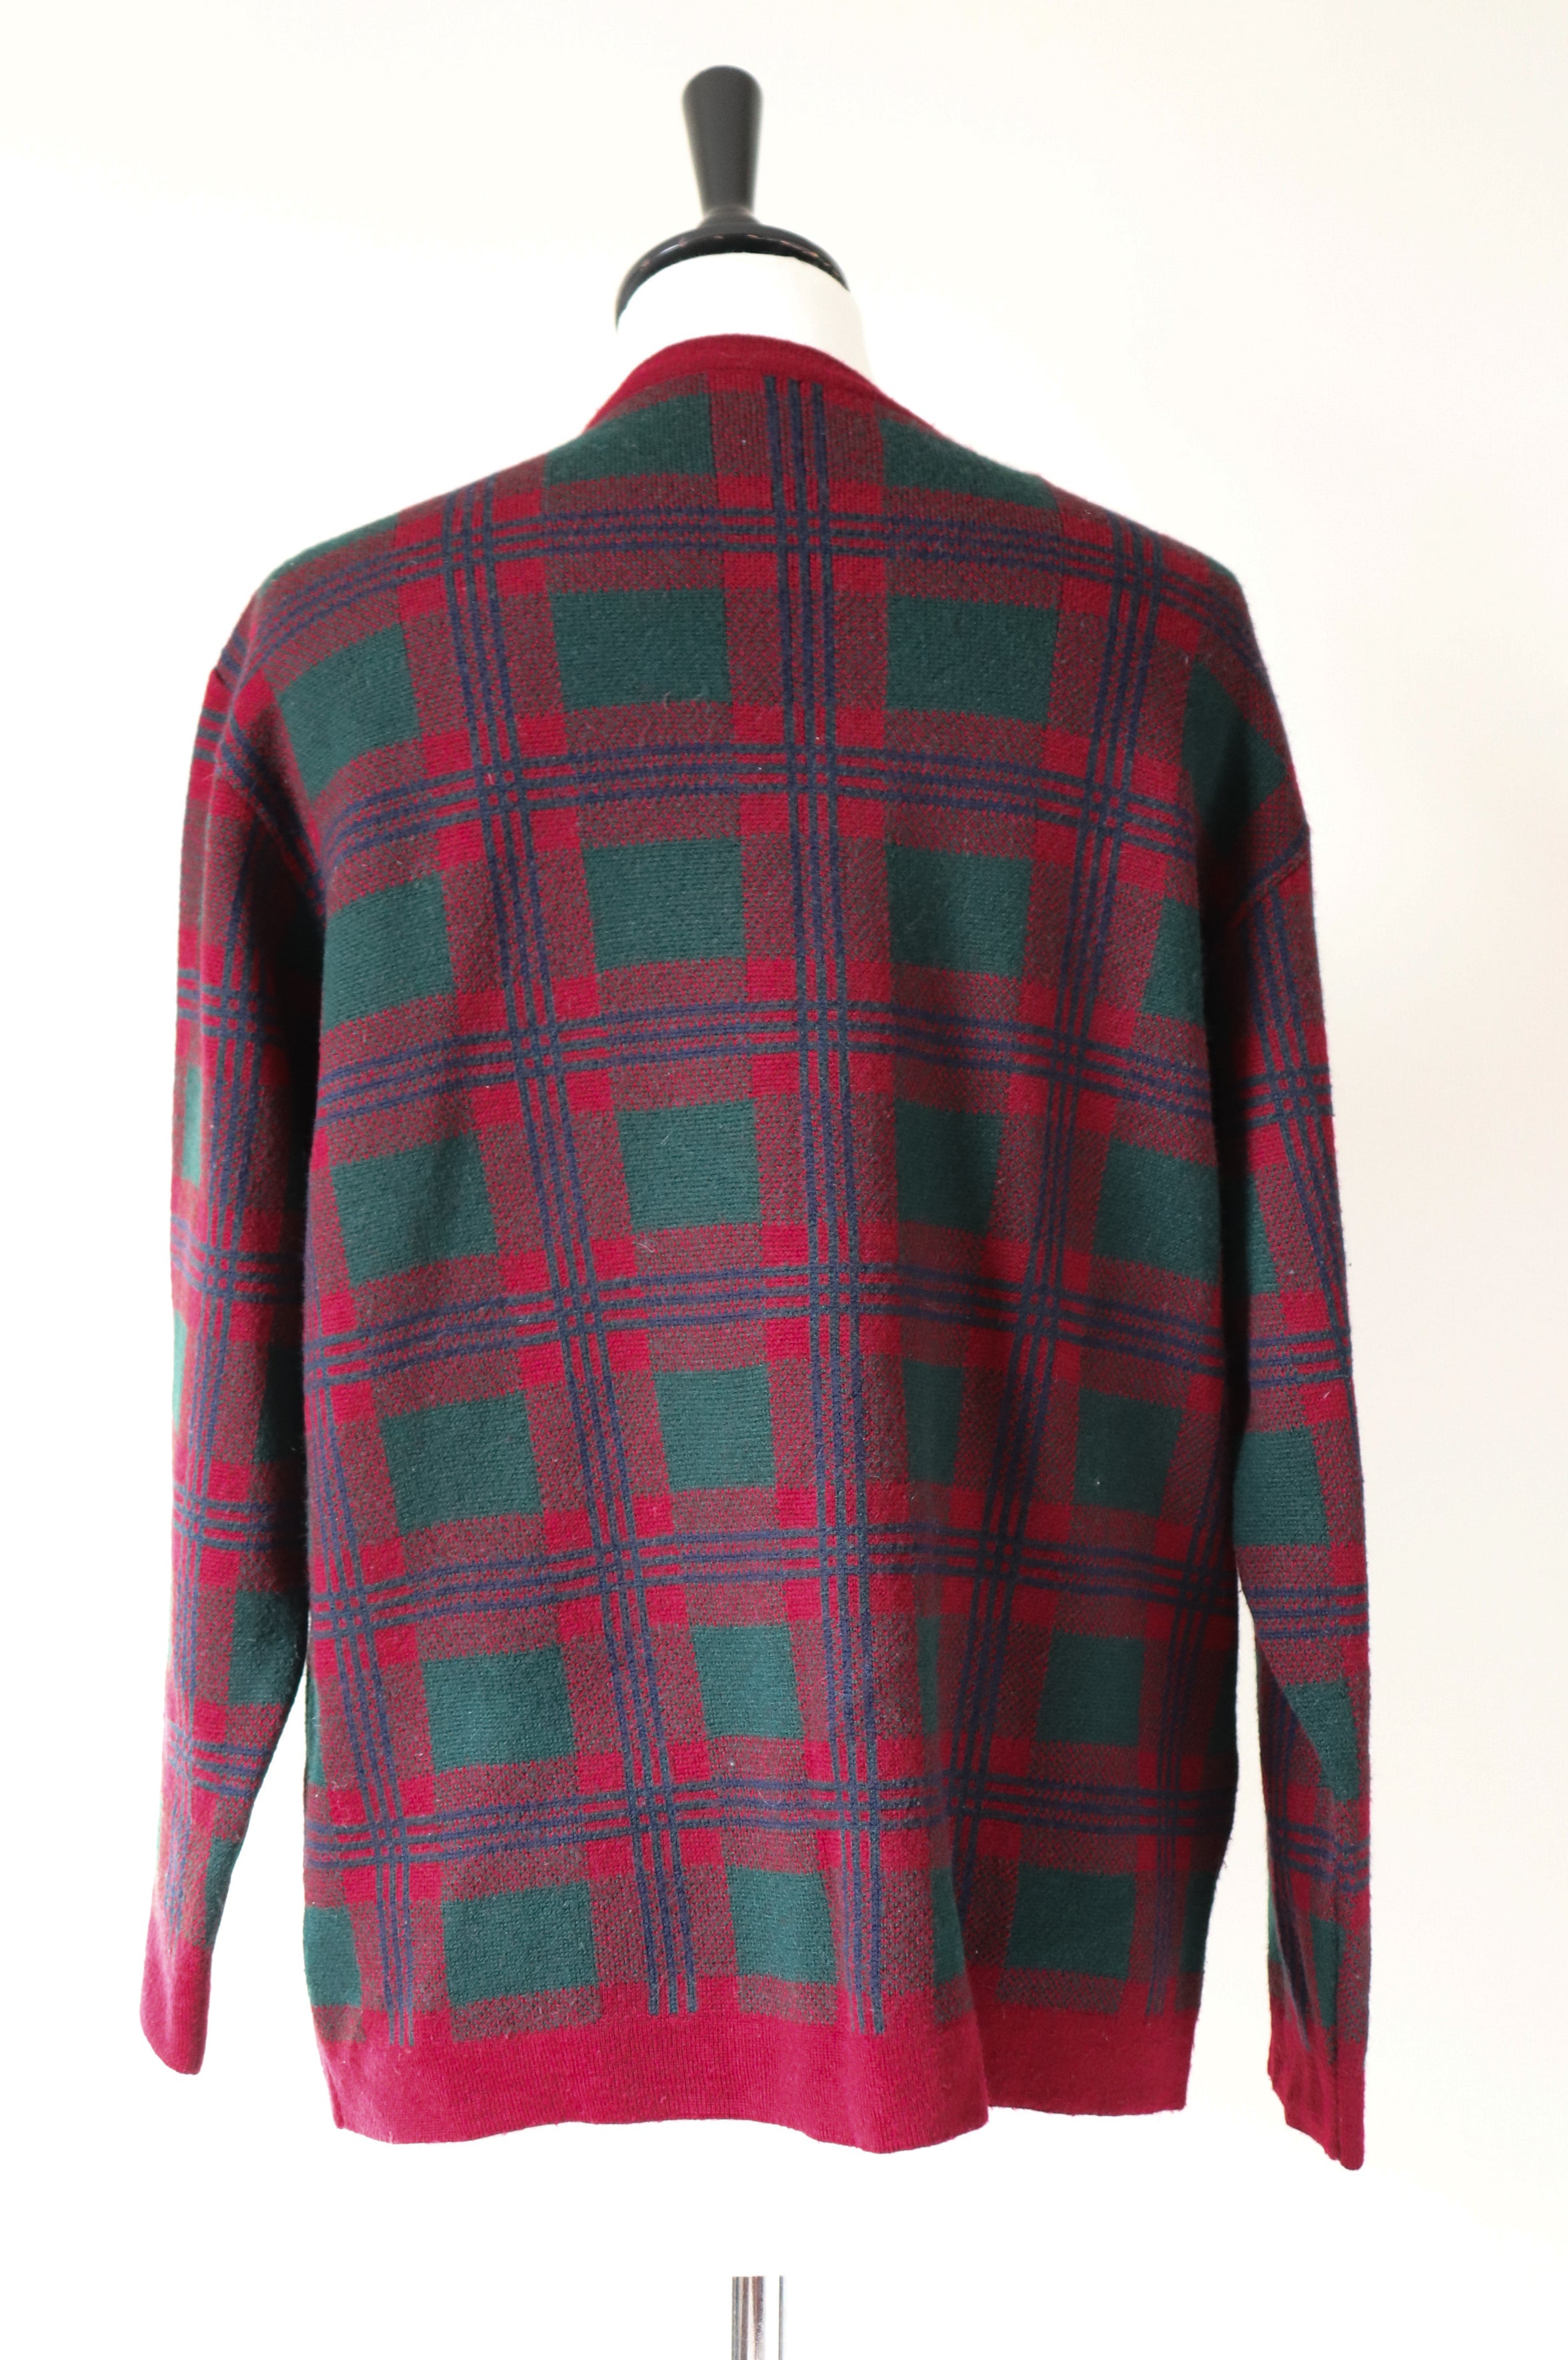 Plaid Vintage Cardigan - 1990s Burgundy / Green  Wool Blend  - M / UK 12